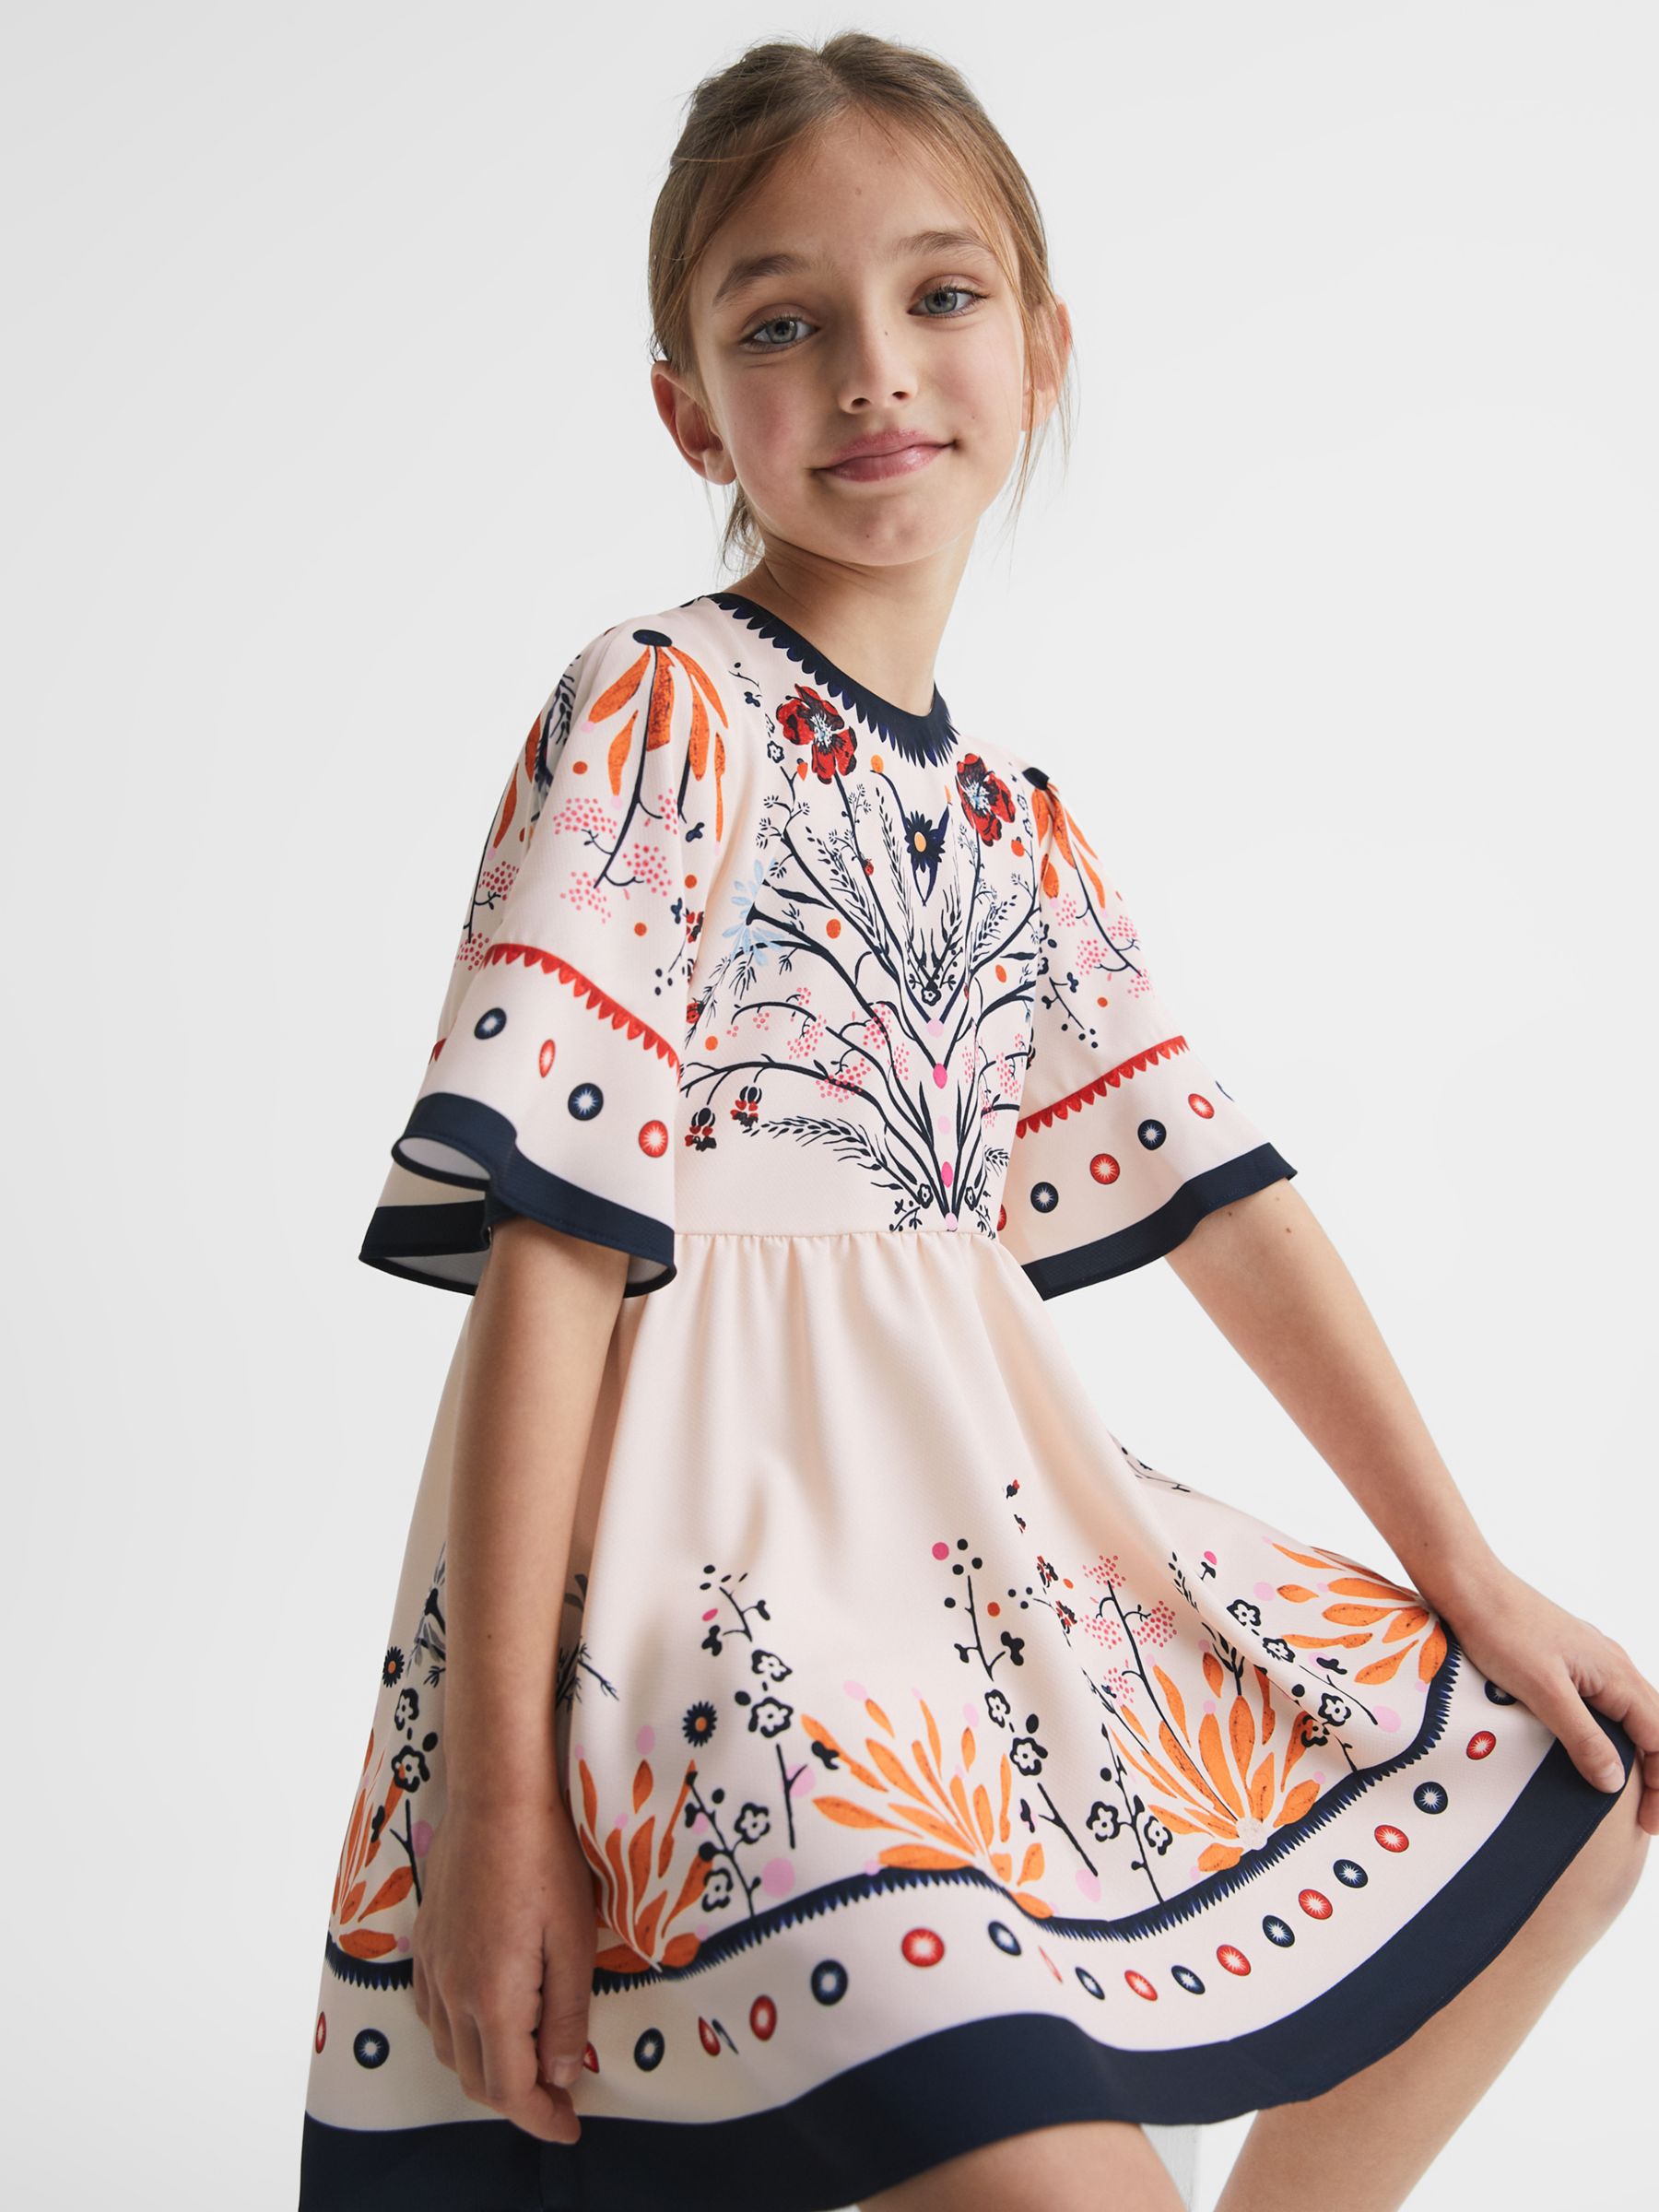 Reiss Kids' Ania Floral Dress at John Lewis Partners